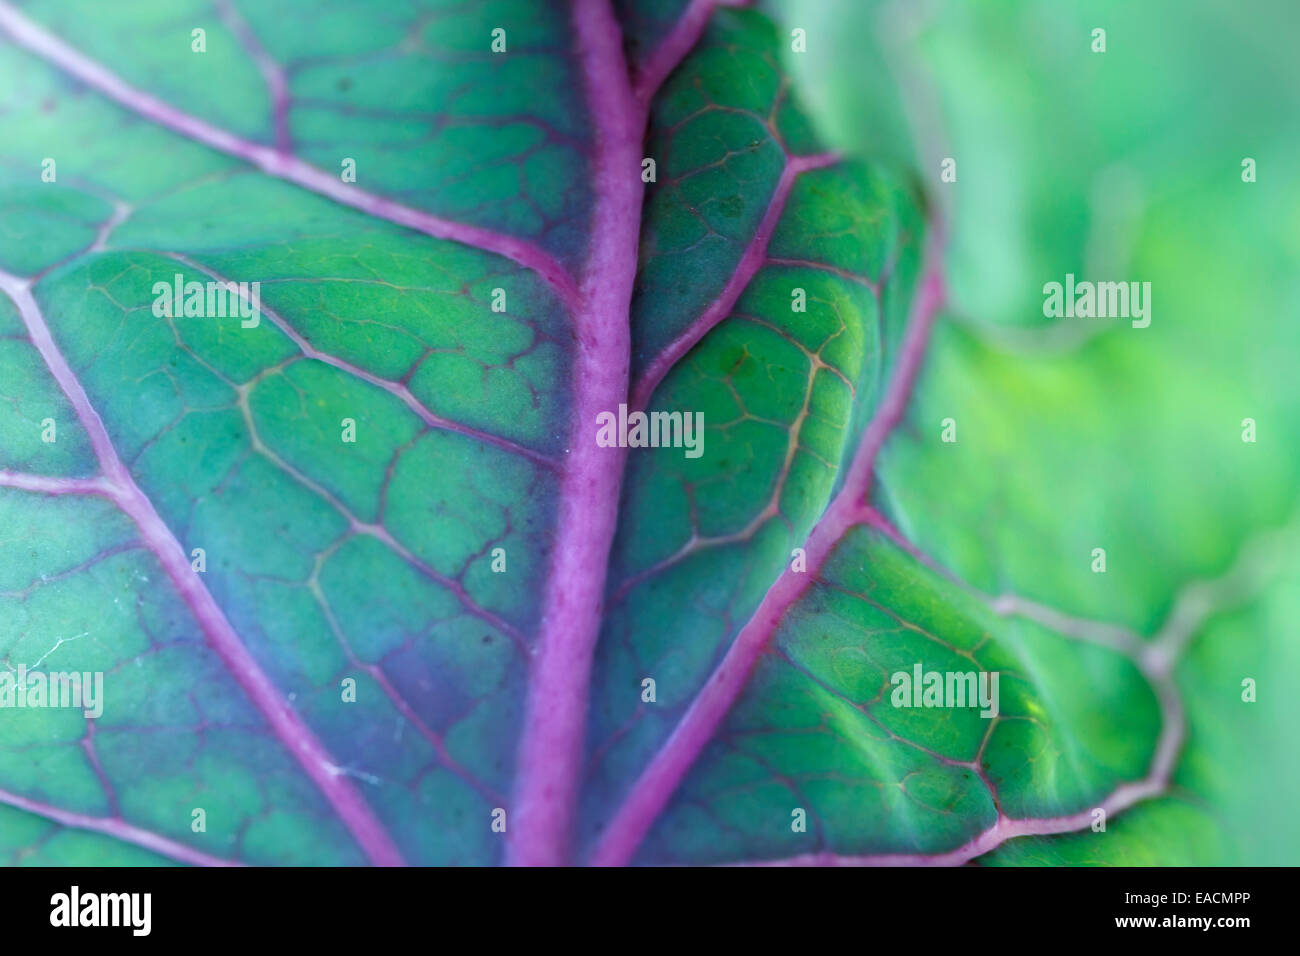 cabbage leaf extreme close-up Stock Photo